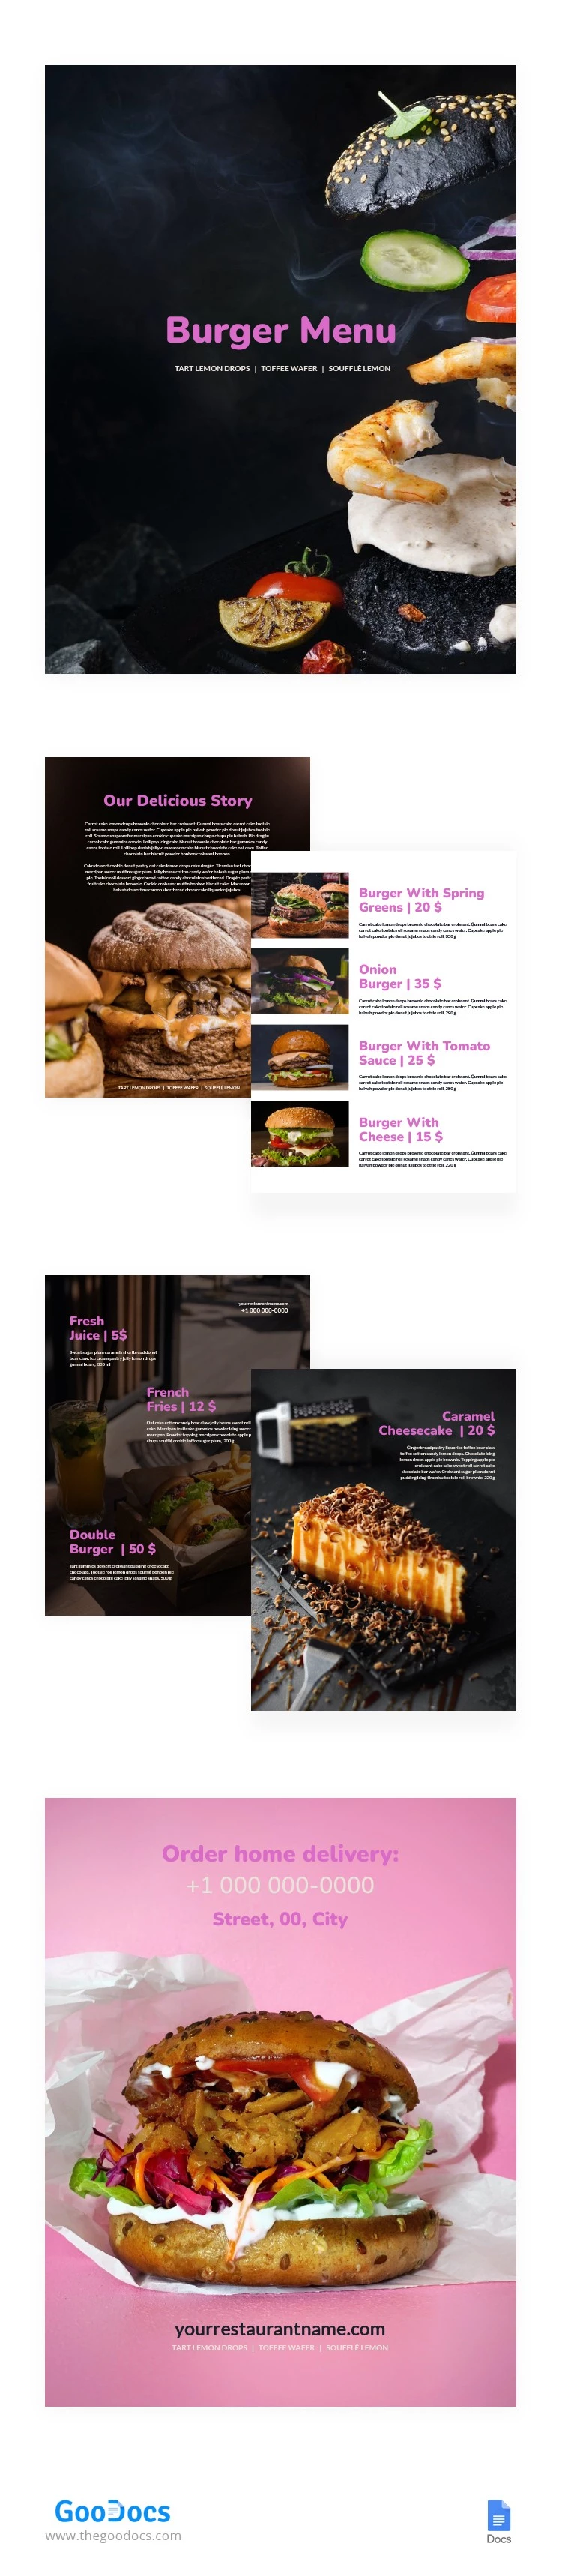 Menu simple du restaurant de burgers - free Google Docs Template - 10063786